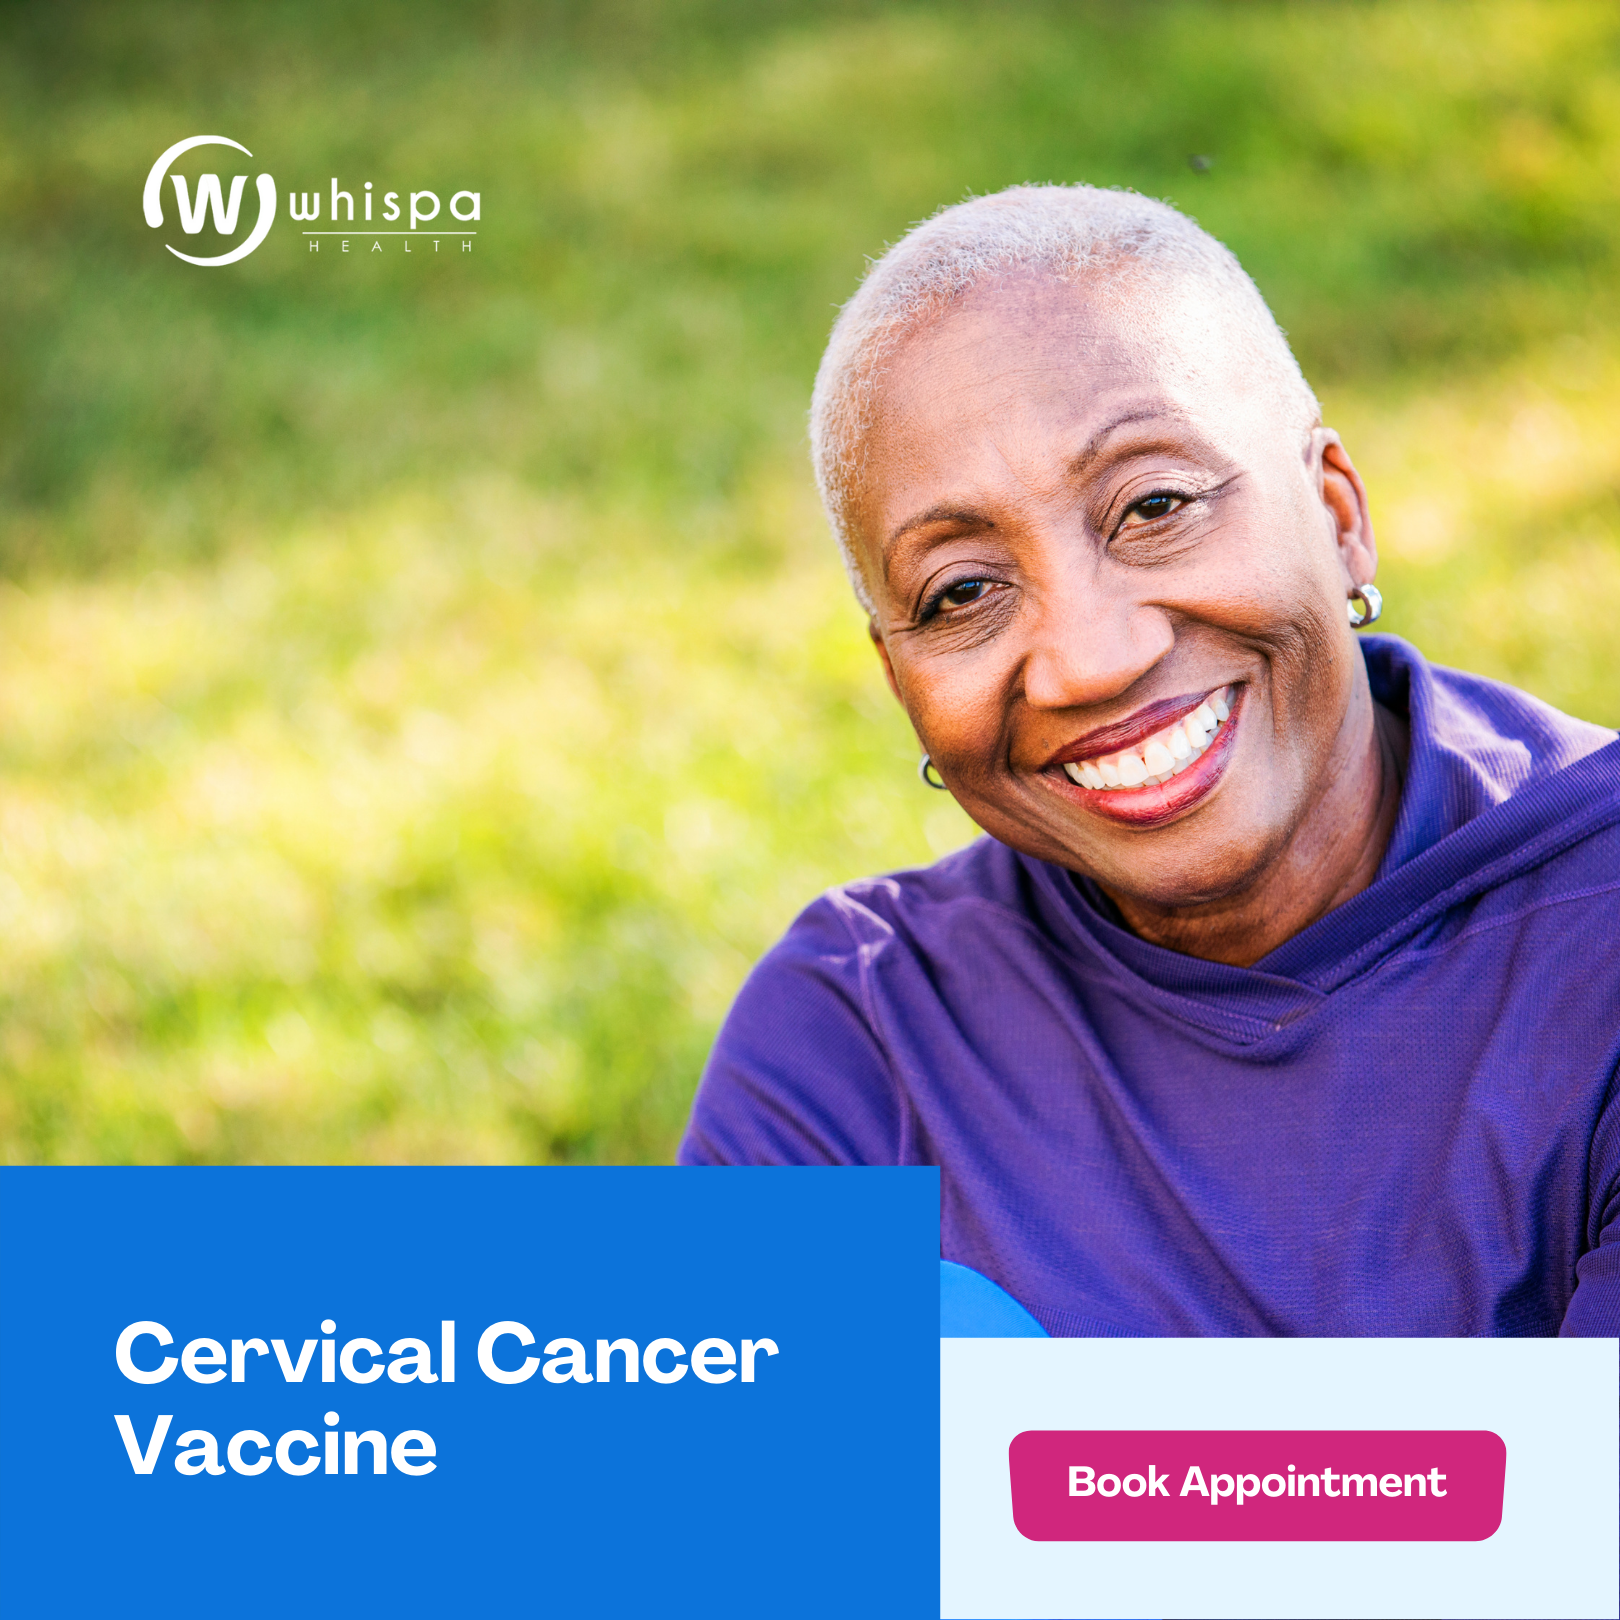 Cervical Cancer (HPV) vaccine